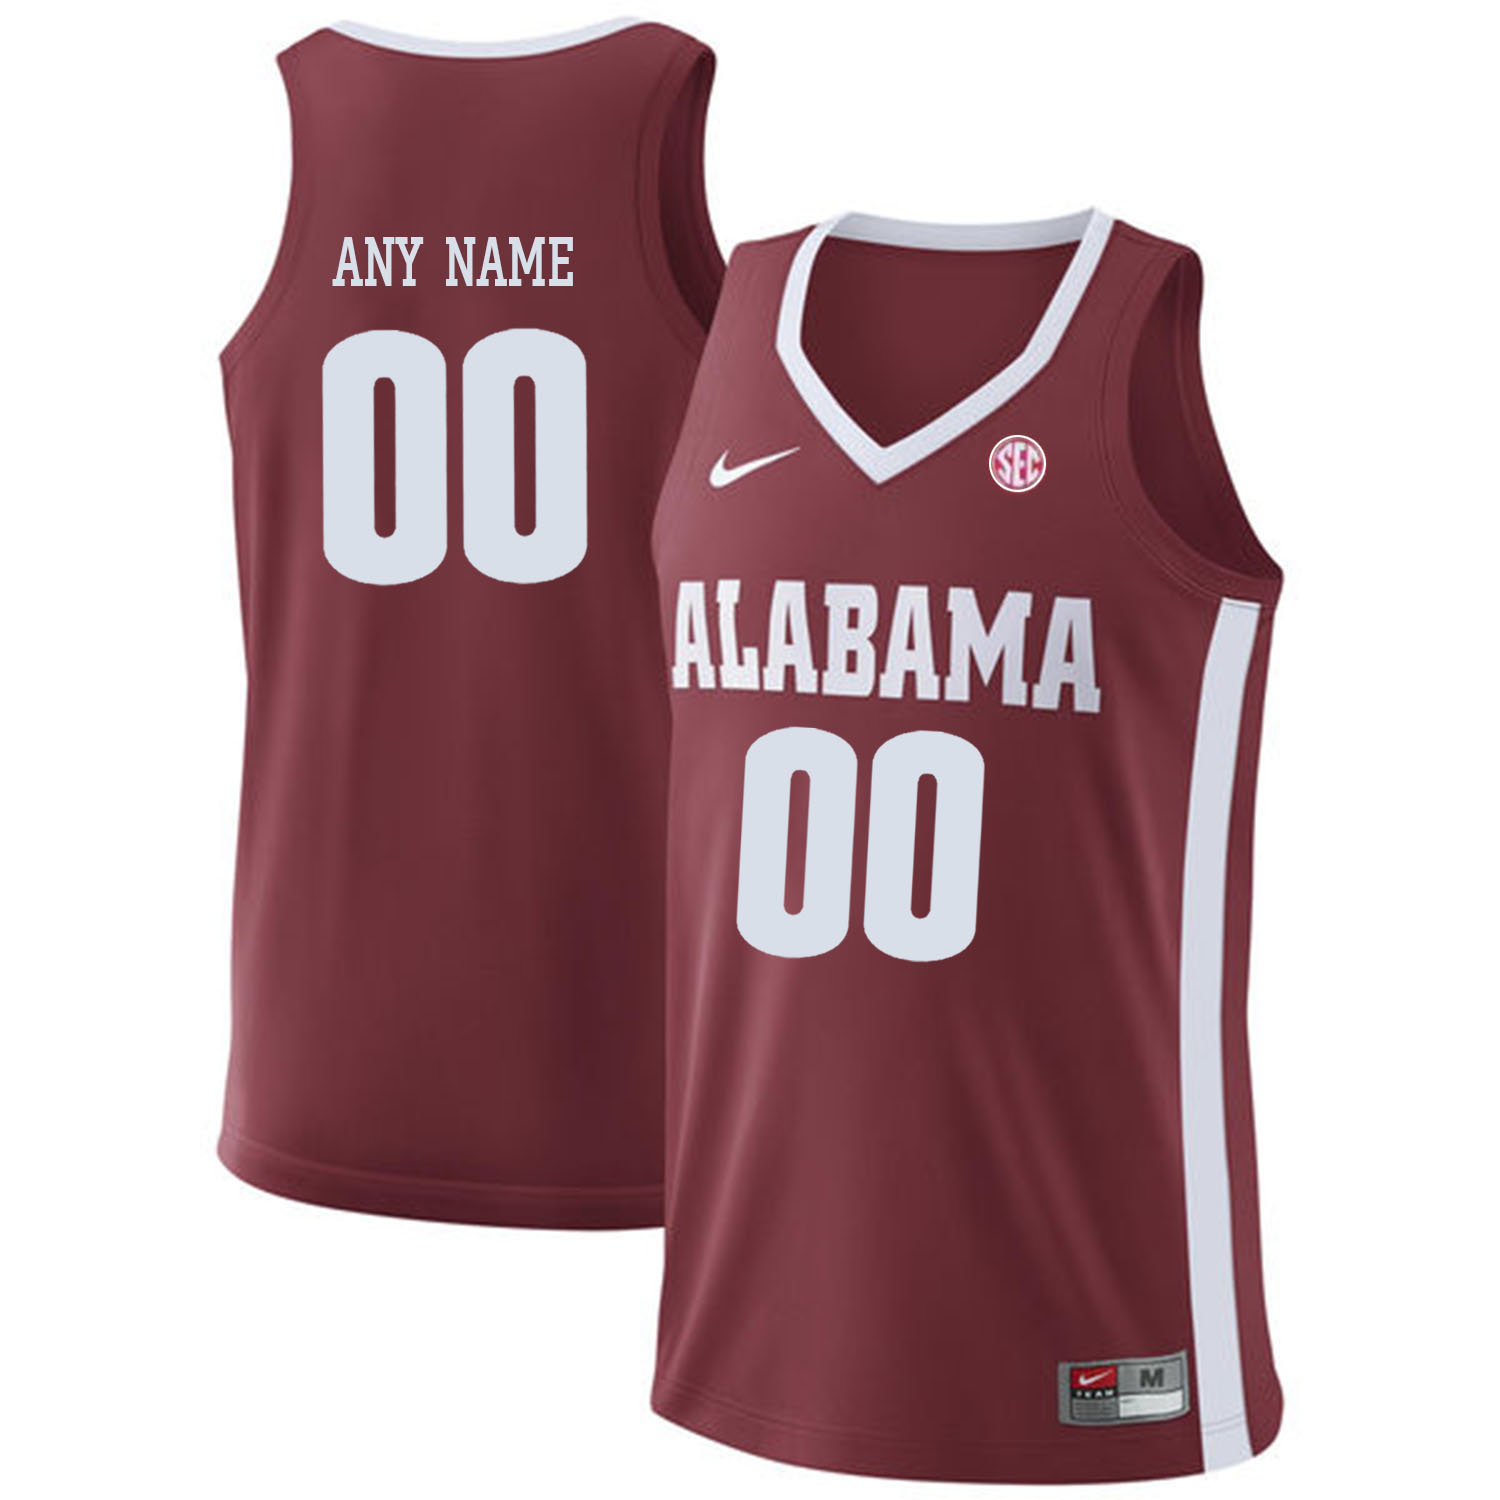 Alabama Crimson Tide Red Men's Customized College Basketball Jersey